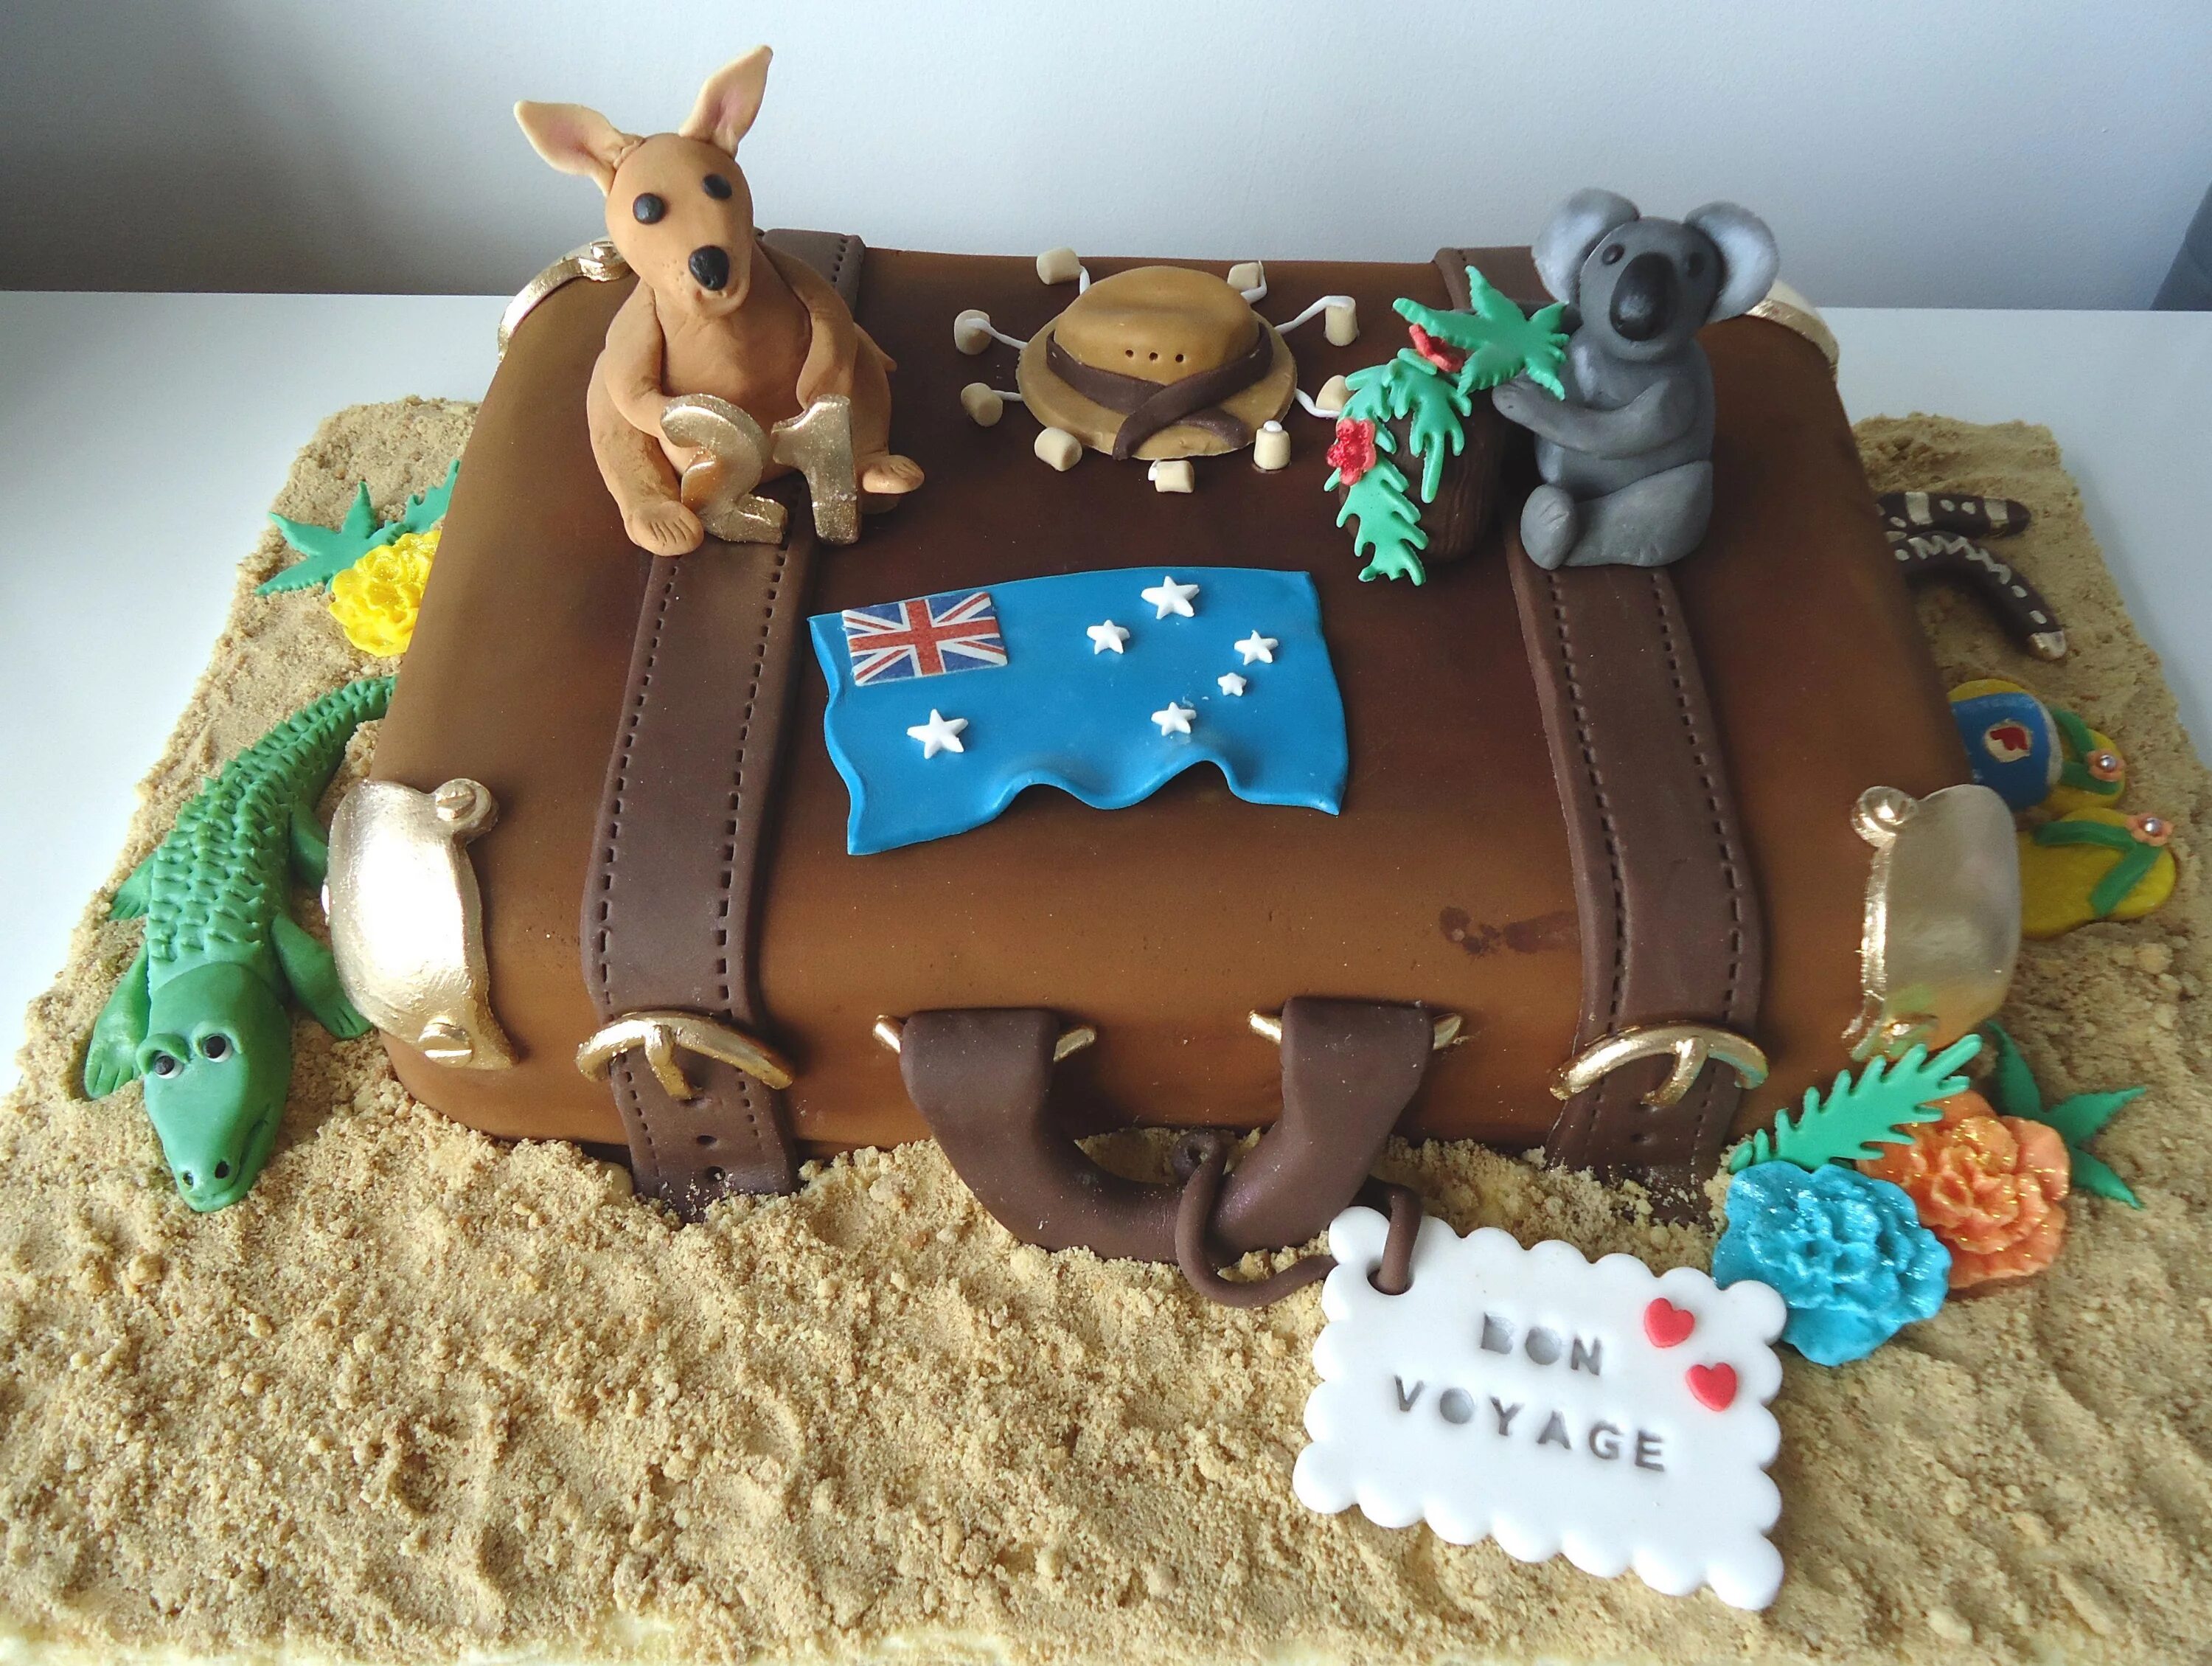 This is my cake. Торт животные. Тортик с животными. Торт с домашними животными. Торты детские с домашними животными.